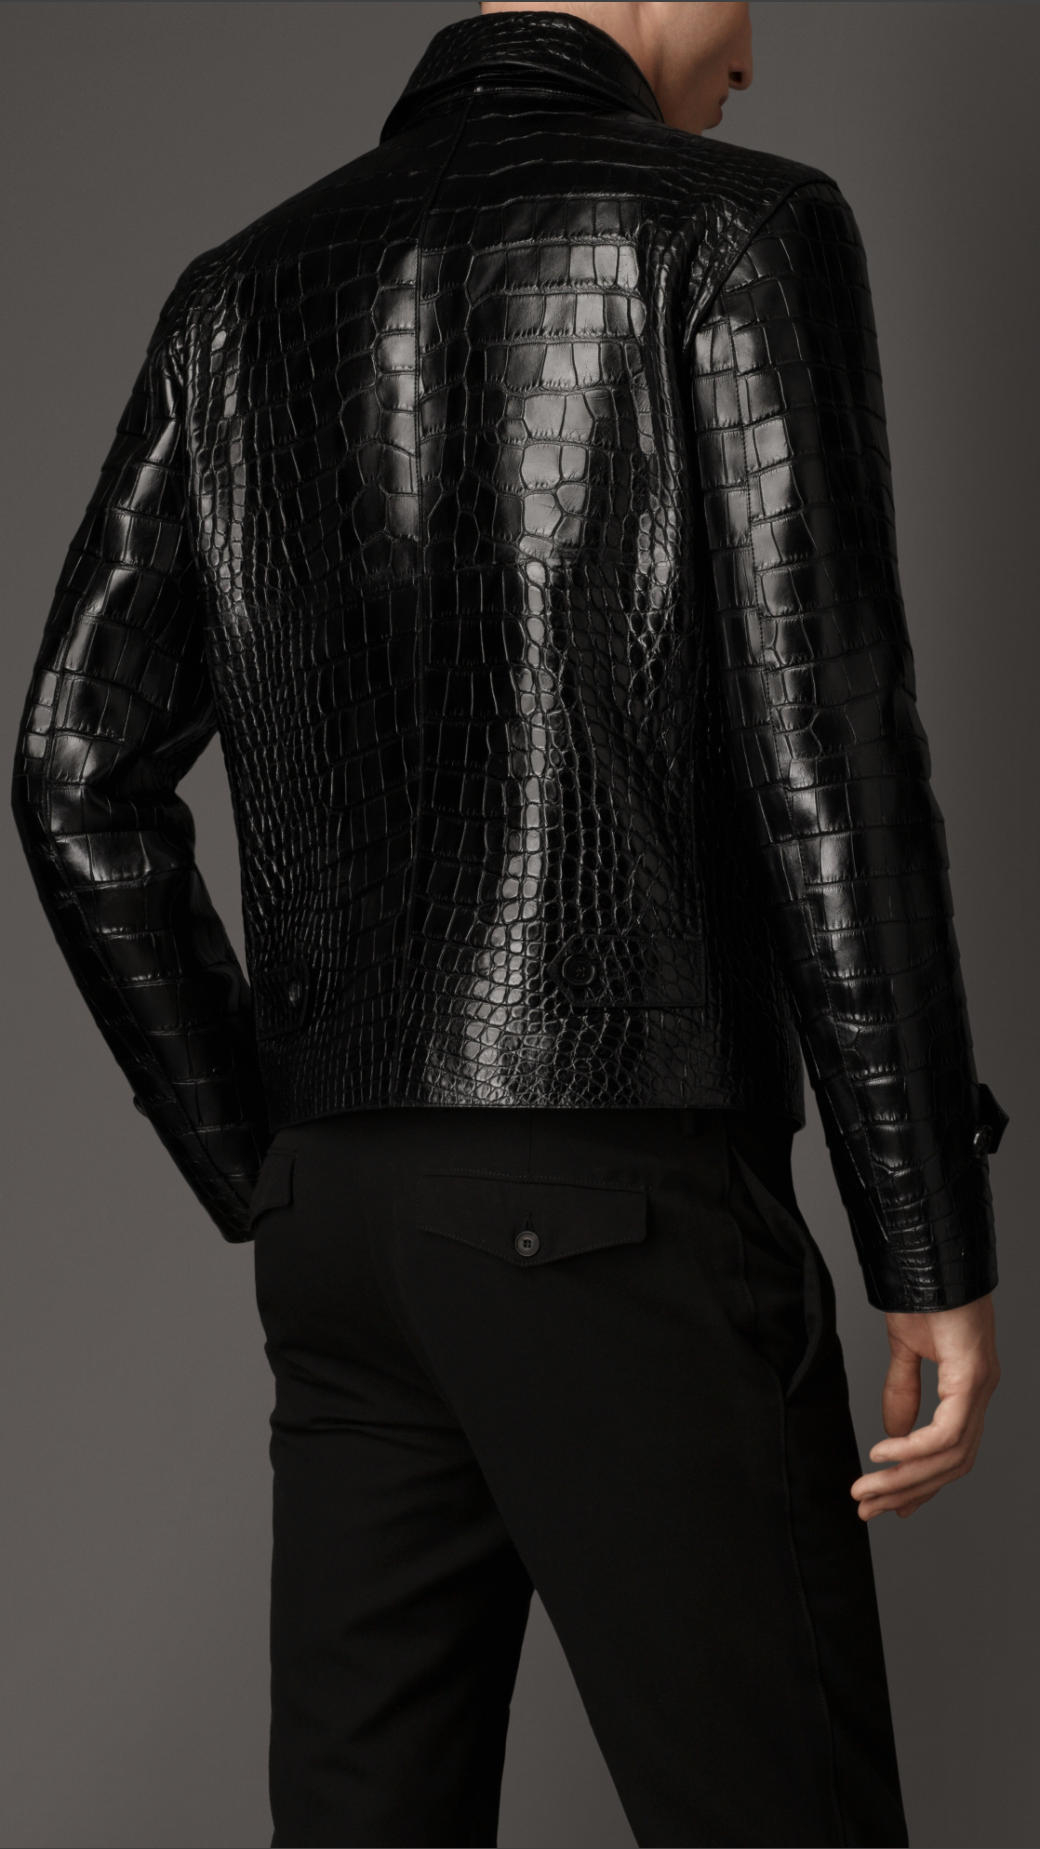 Lyst - Burberry Alligator Leather Jacket in Black for Men